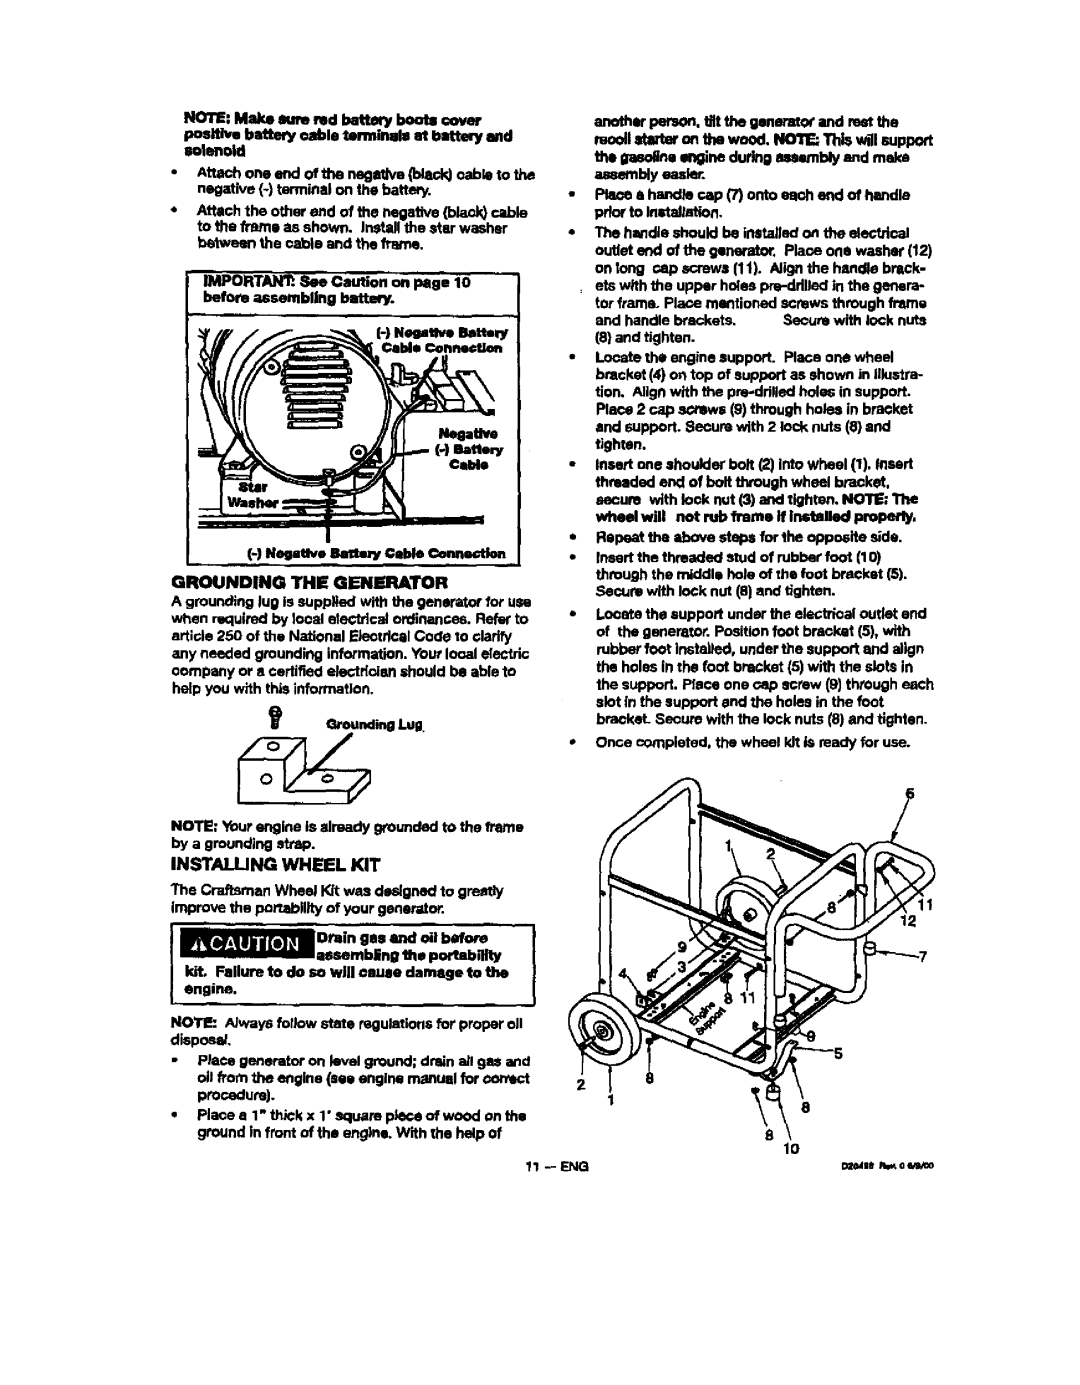 Sears 329, 919, 150 owner manual JI UlJ?-o, Installing Wheel Kit, pressure 